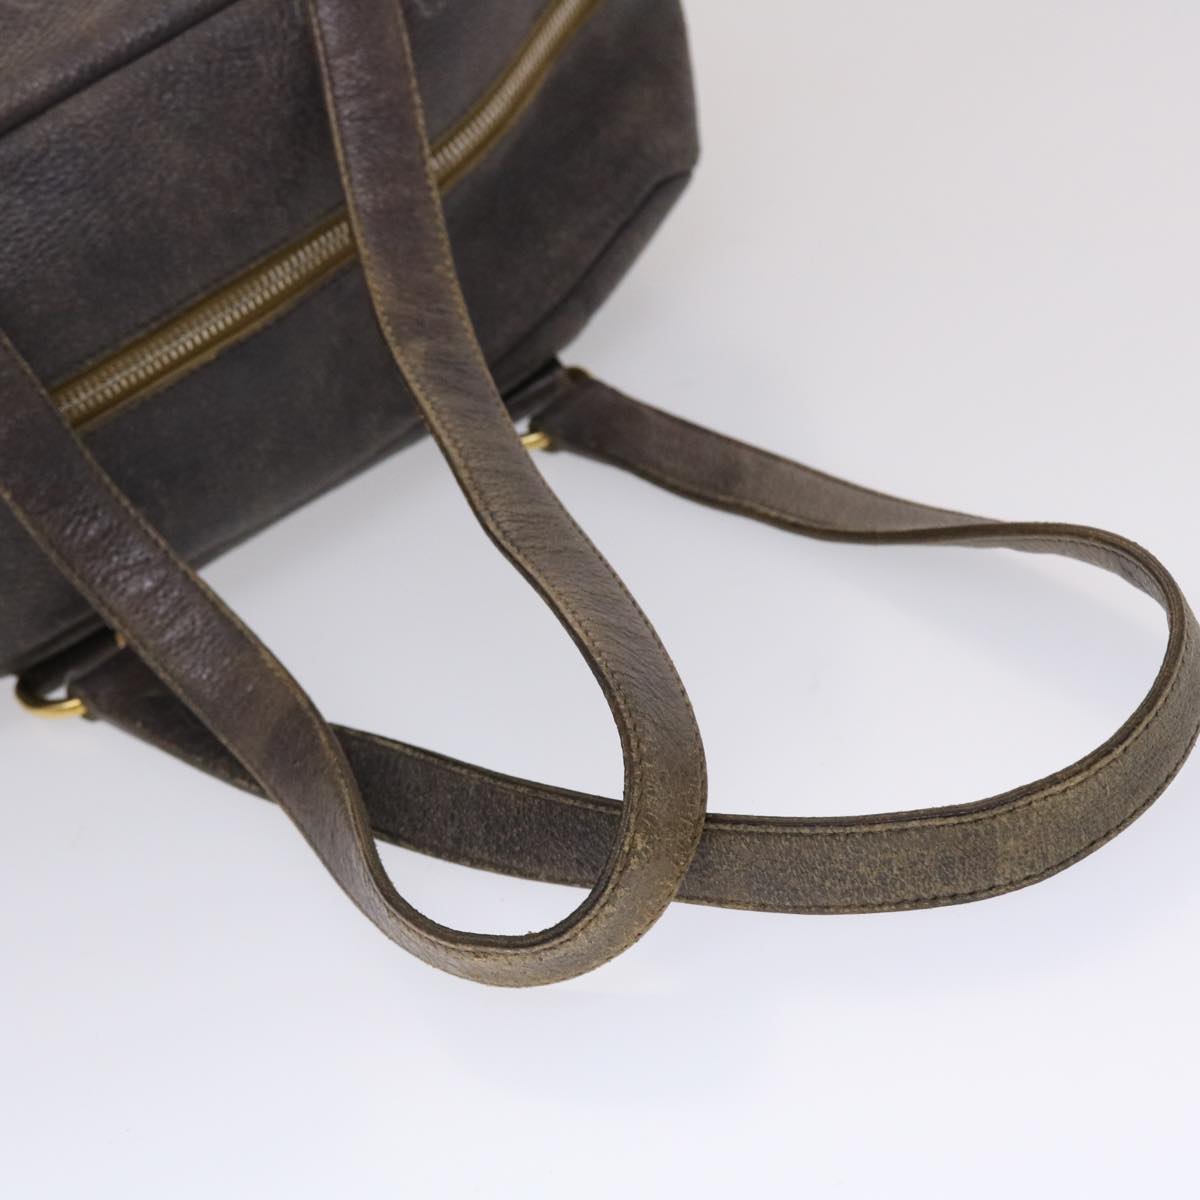 PRADA Shoulder Bag Leather Gray Auth bs6398